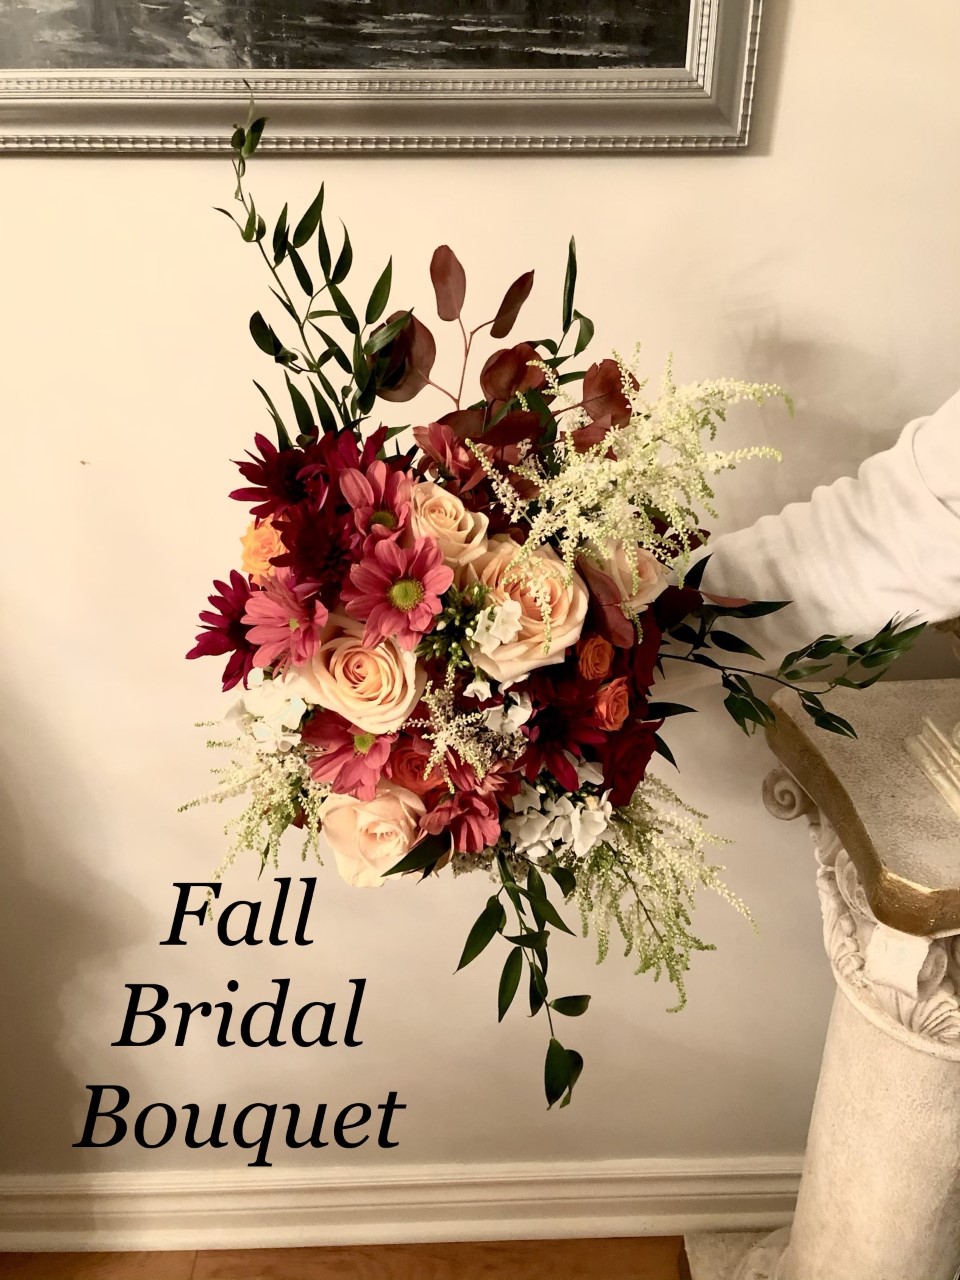 Fall Bridal Bouquet $180 